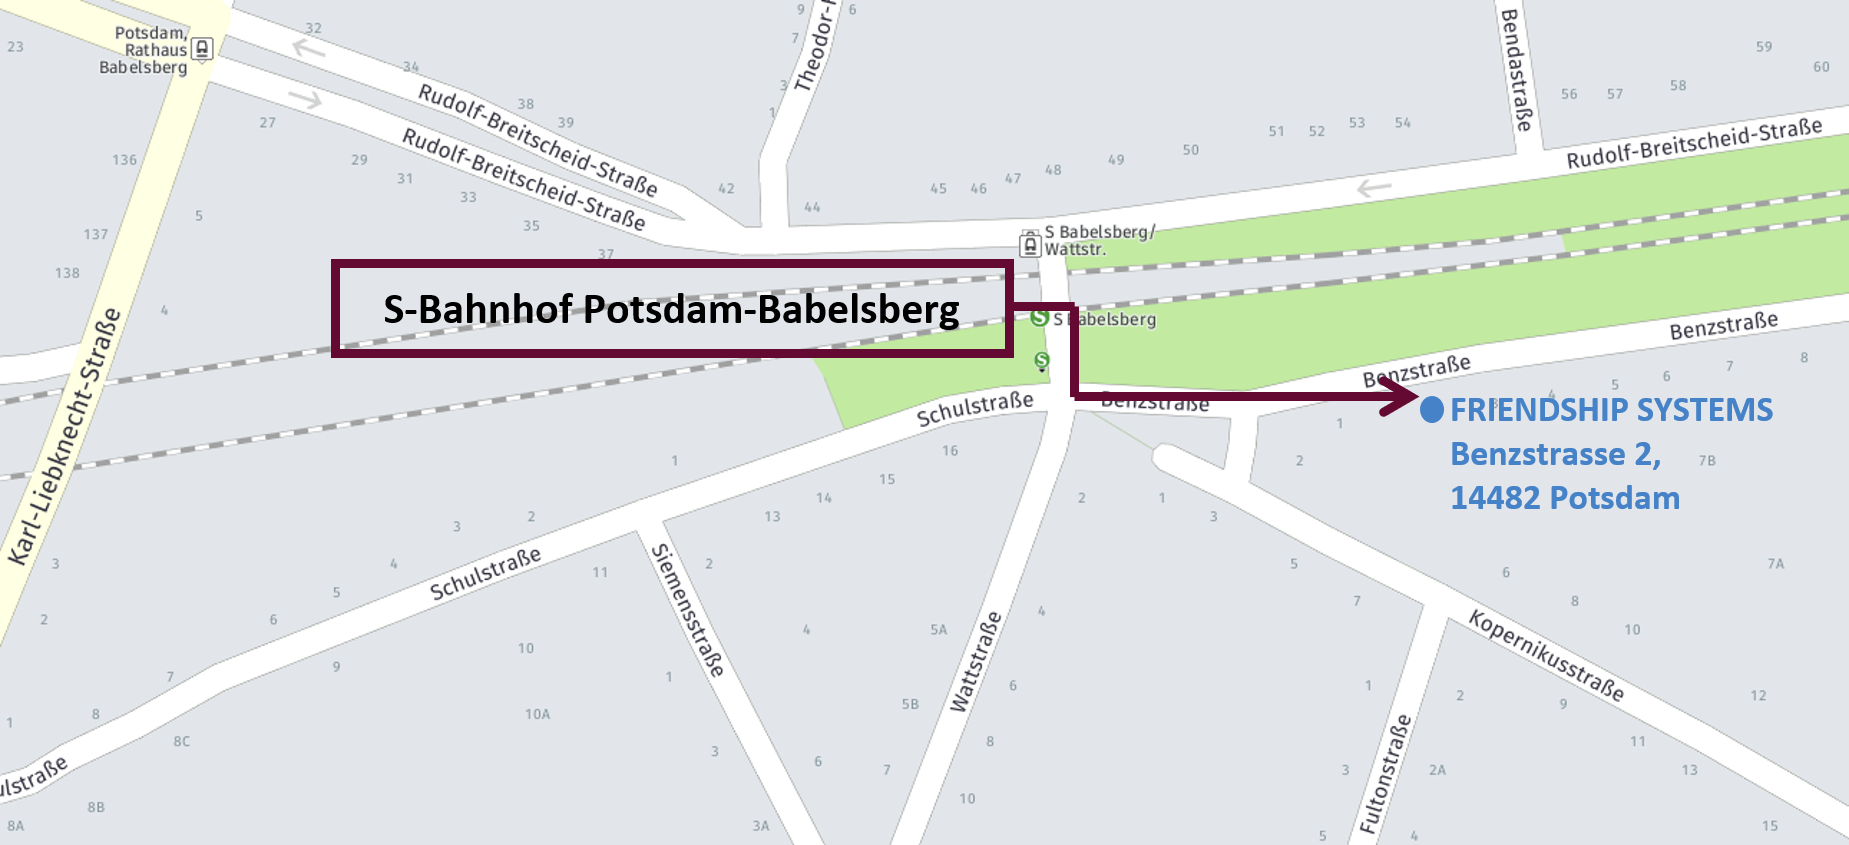 Sbahnhof Babelsberg Friendship Systems